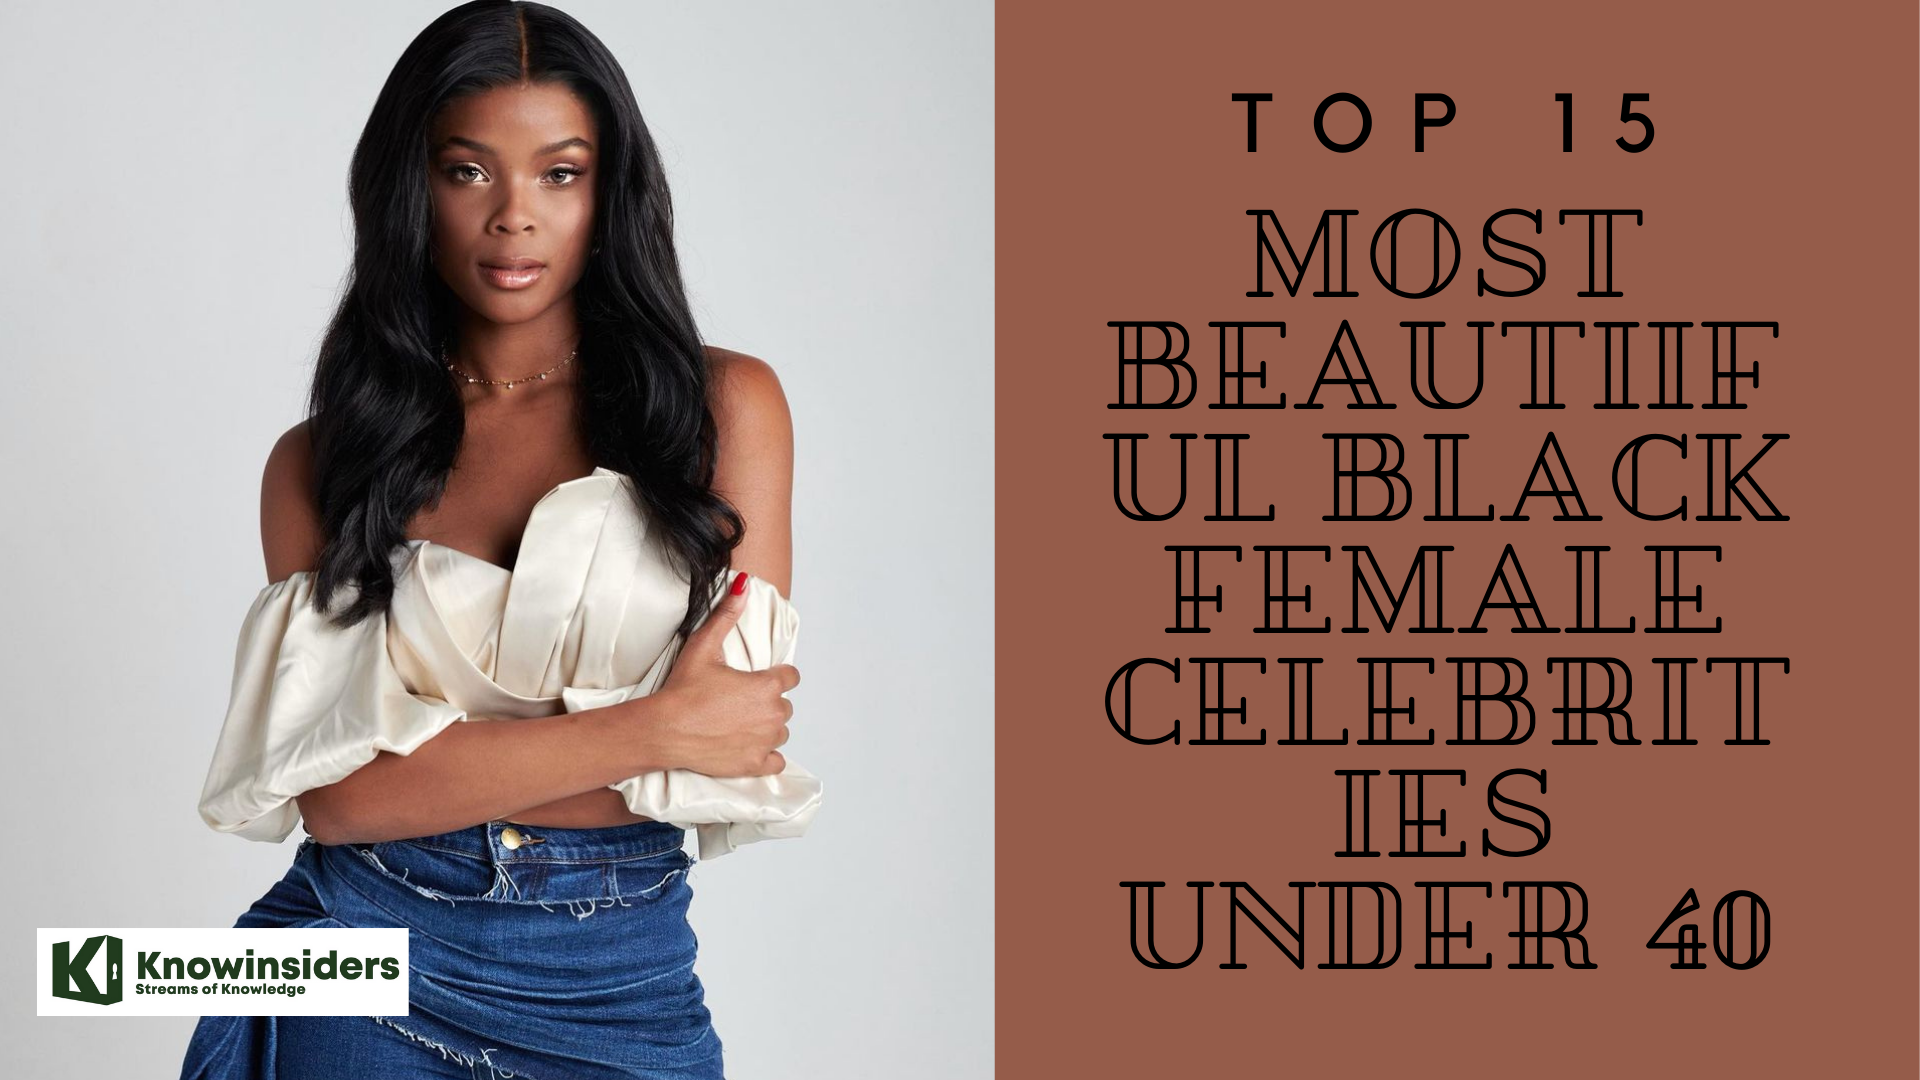 Top 15 Most Beautiful Black Female Celebrities Under 40